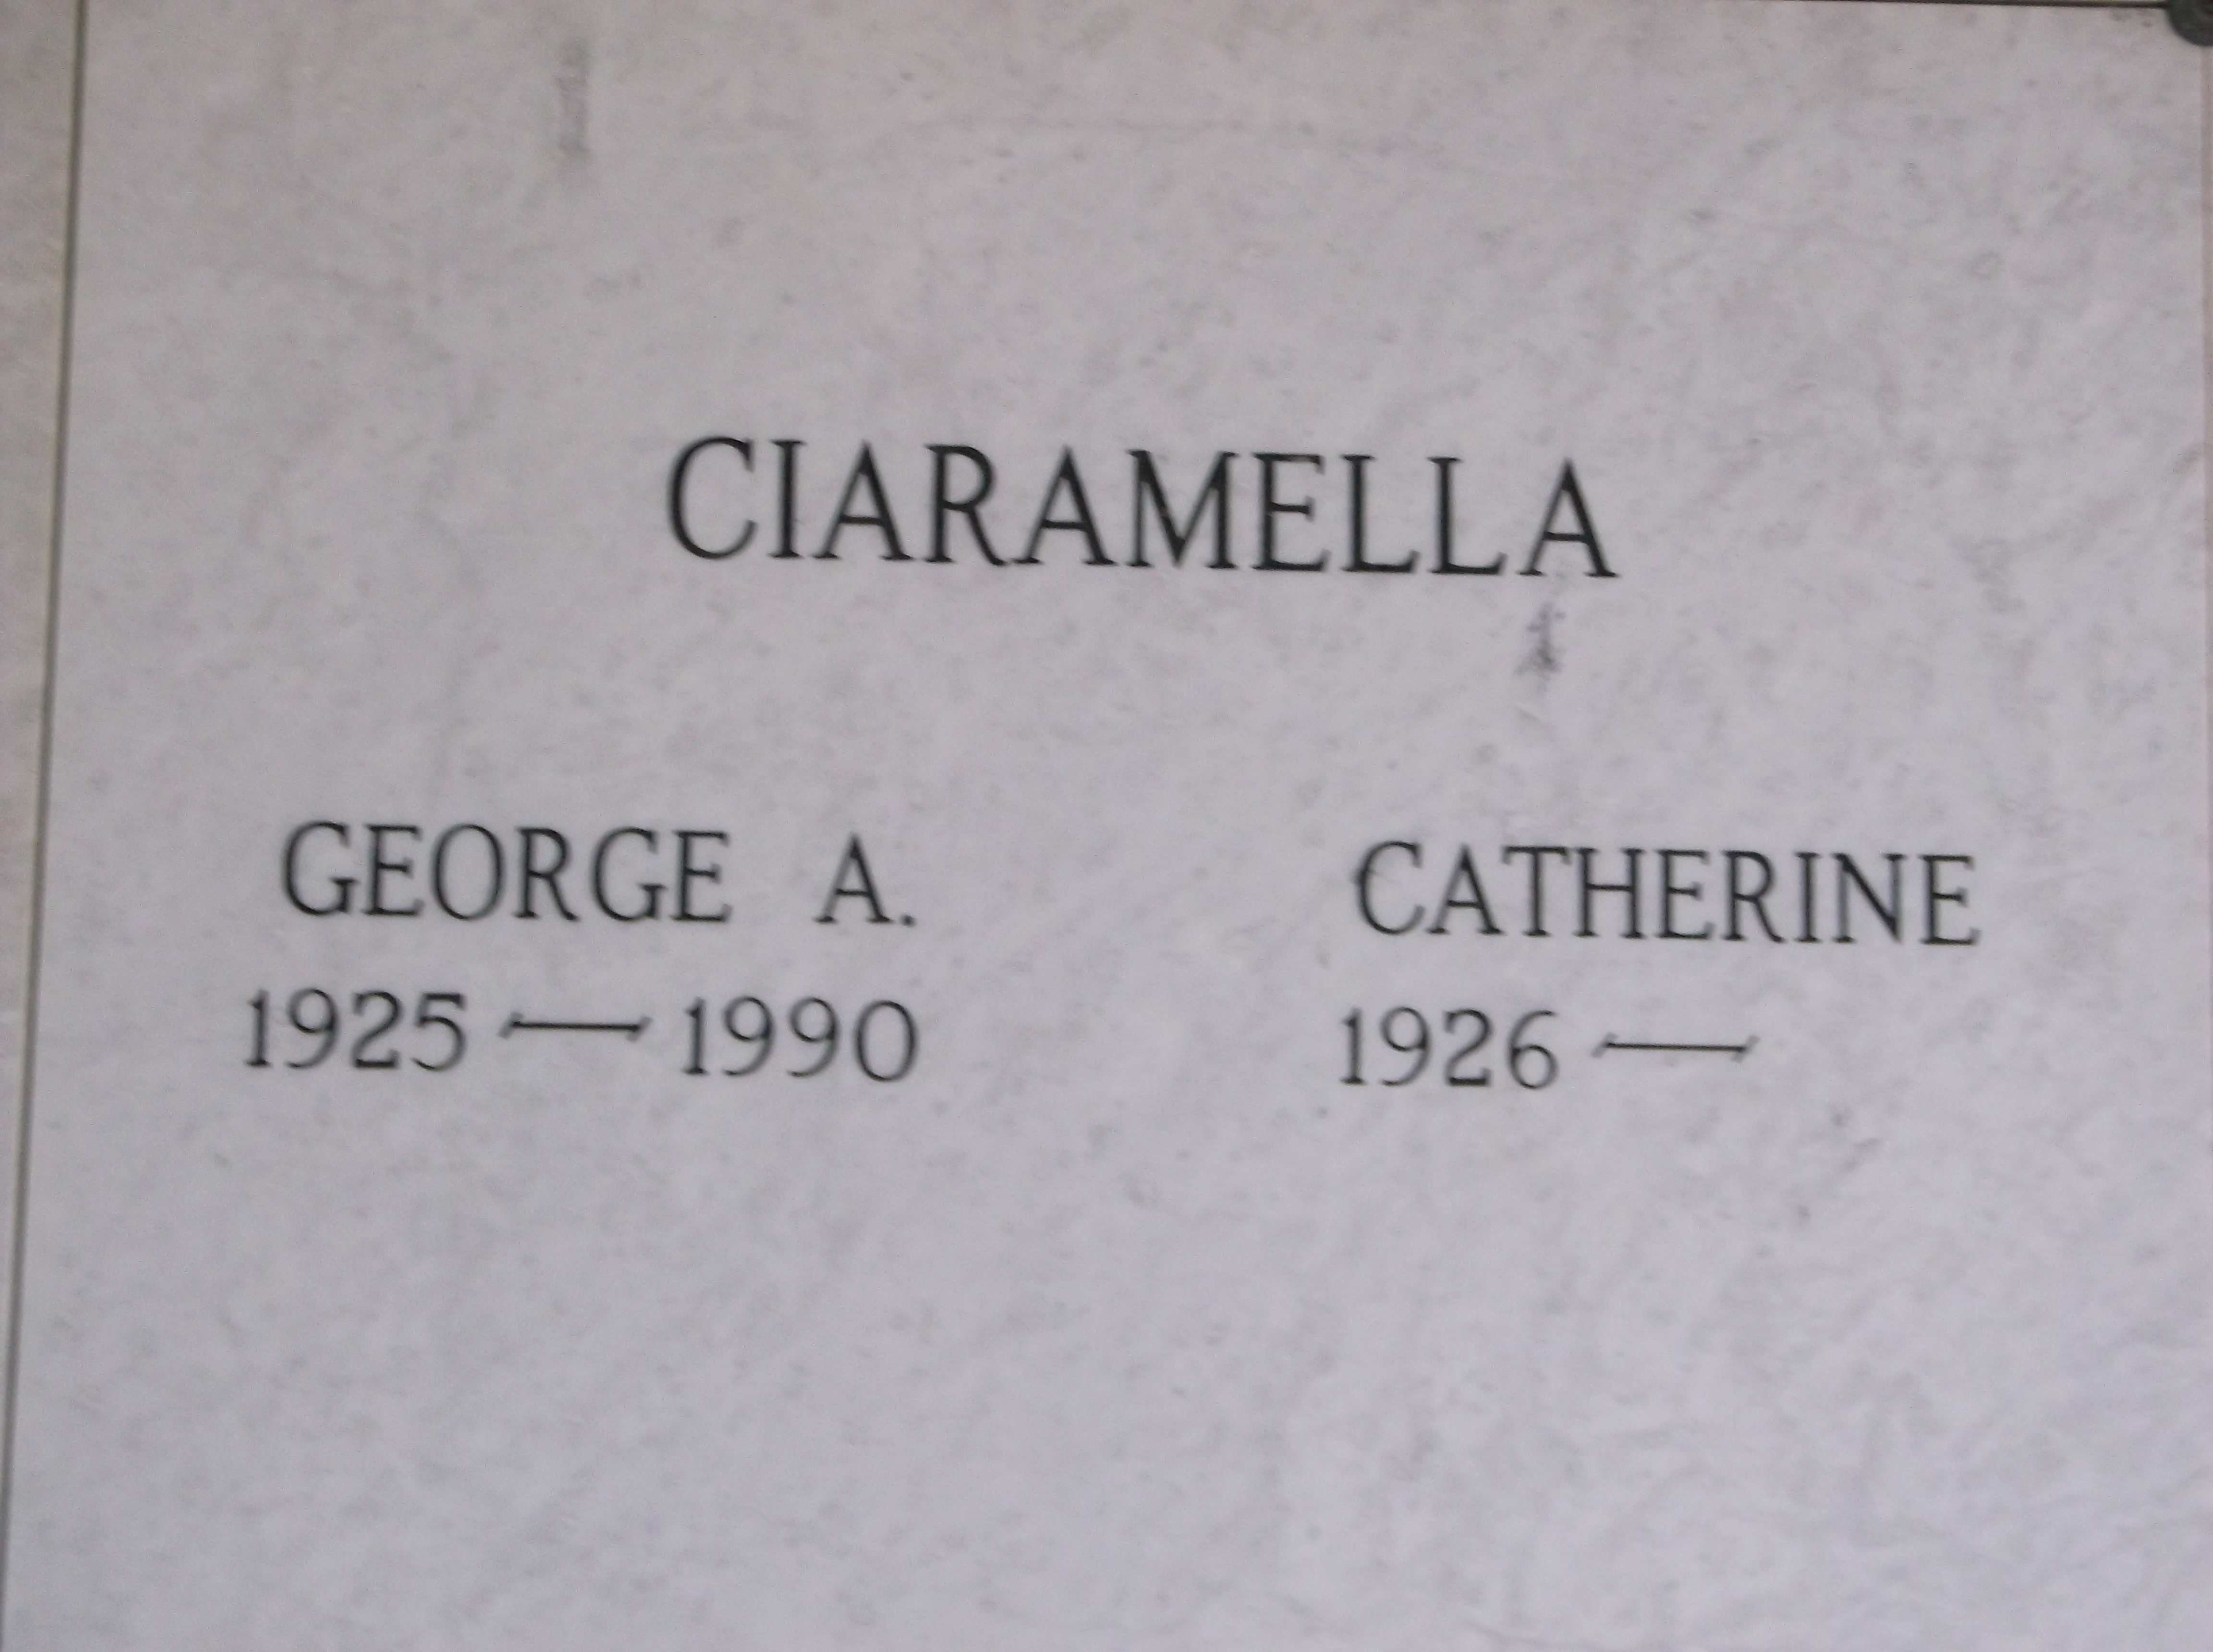 George A Ciaramella